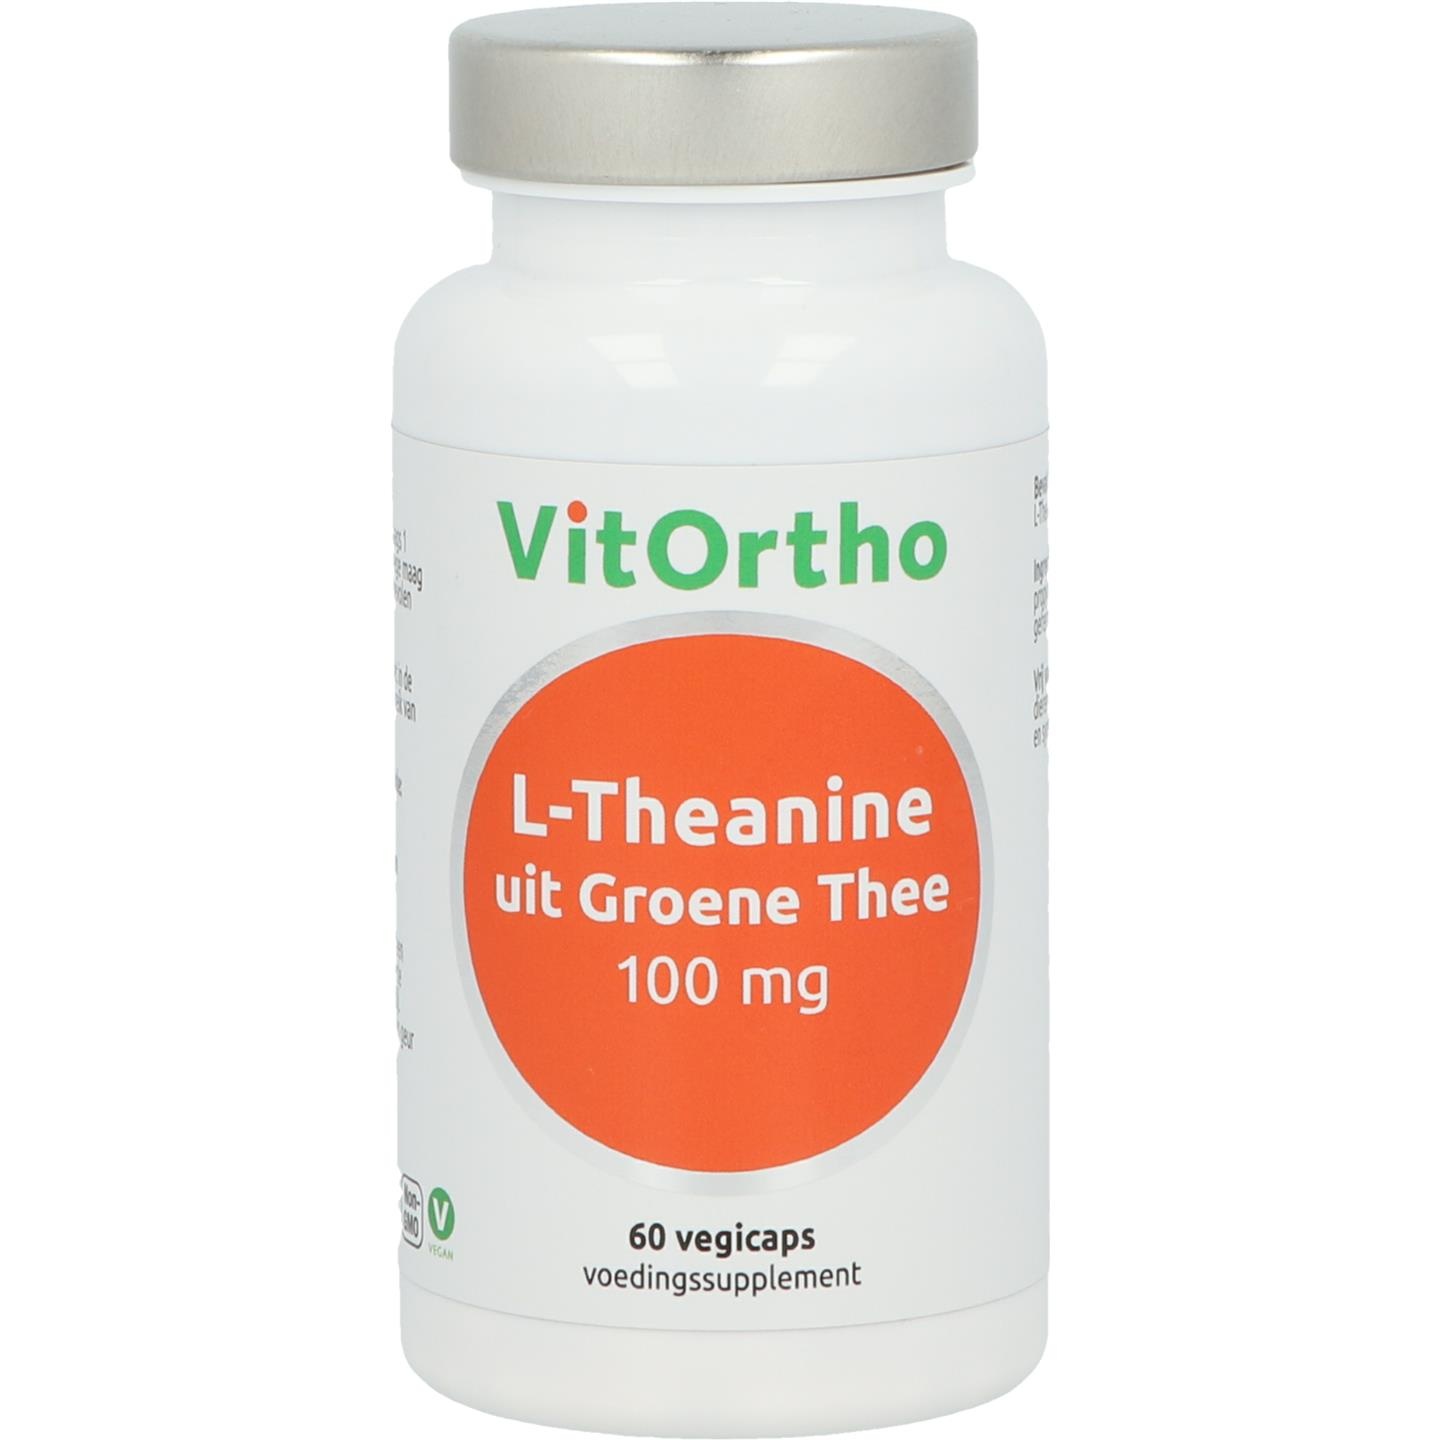 Vitortho VitOrtho L-Theanin aus grünem Tee 100 mg (60 vegetarische Kapseln)